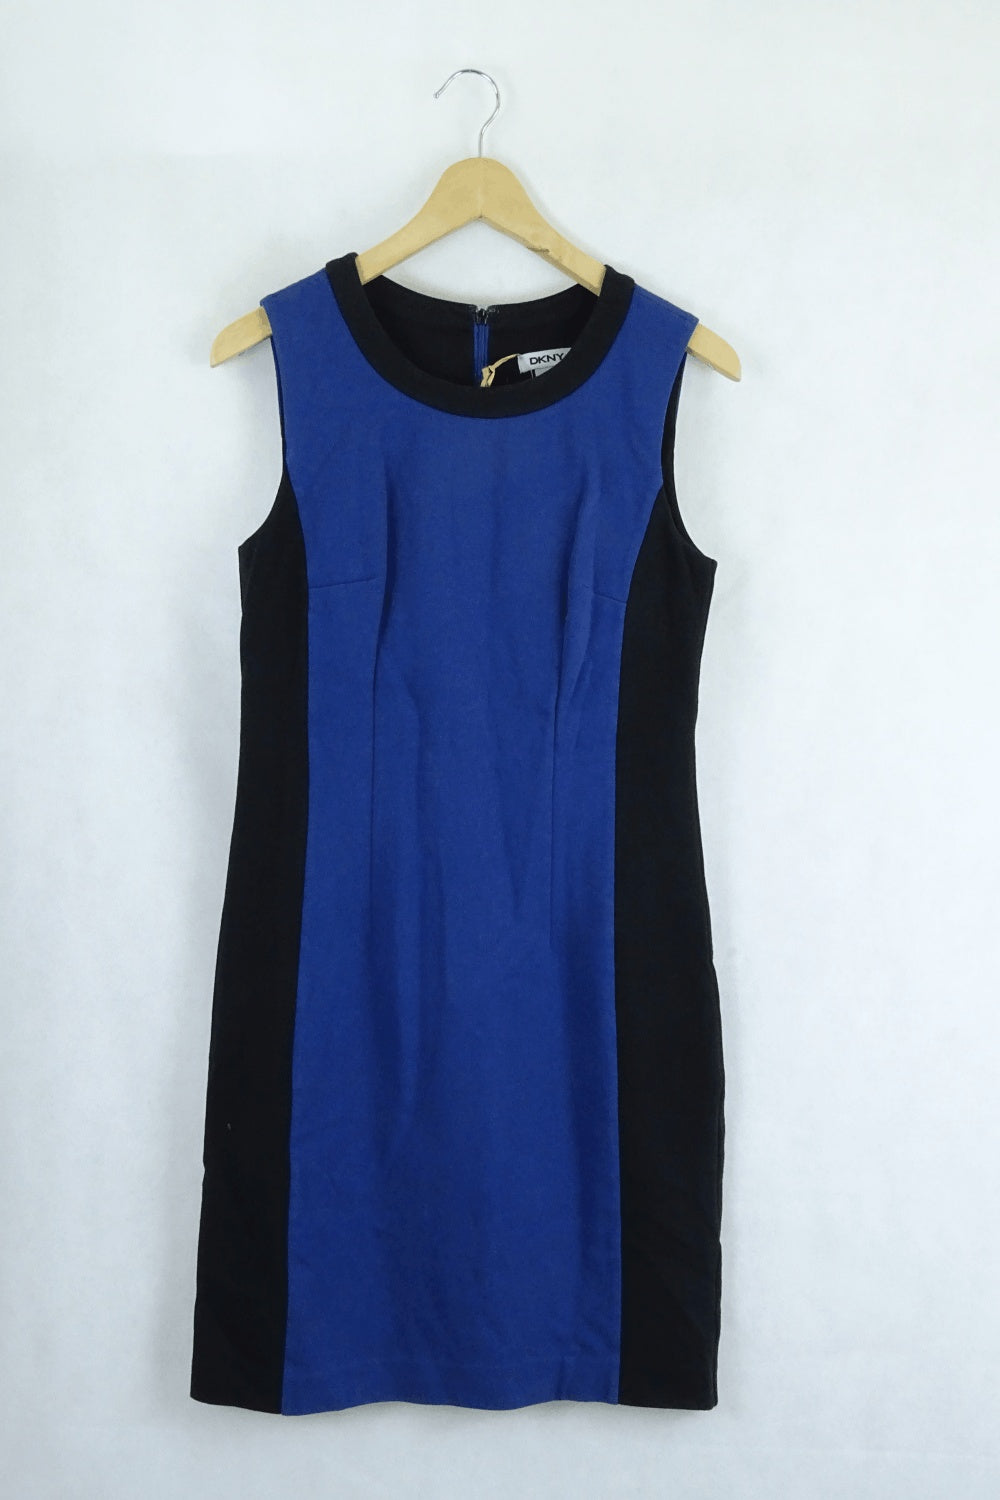 DKNY Donna Karan  Black And Blue Dress 4